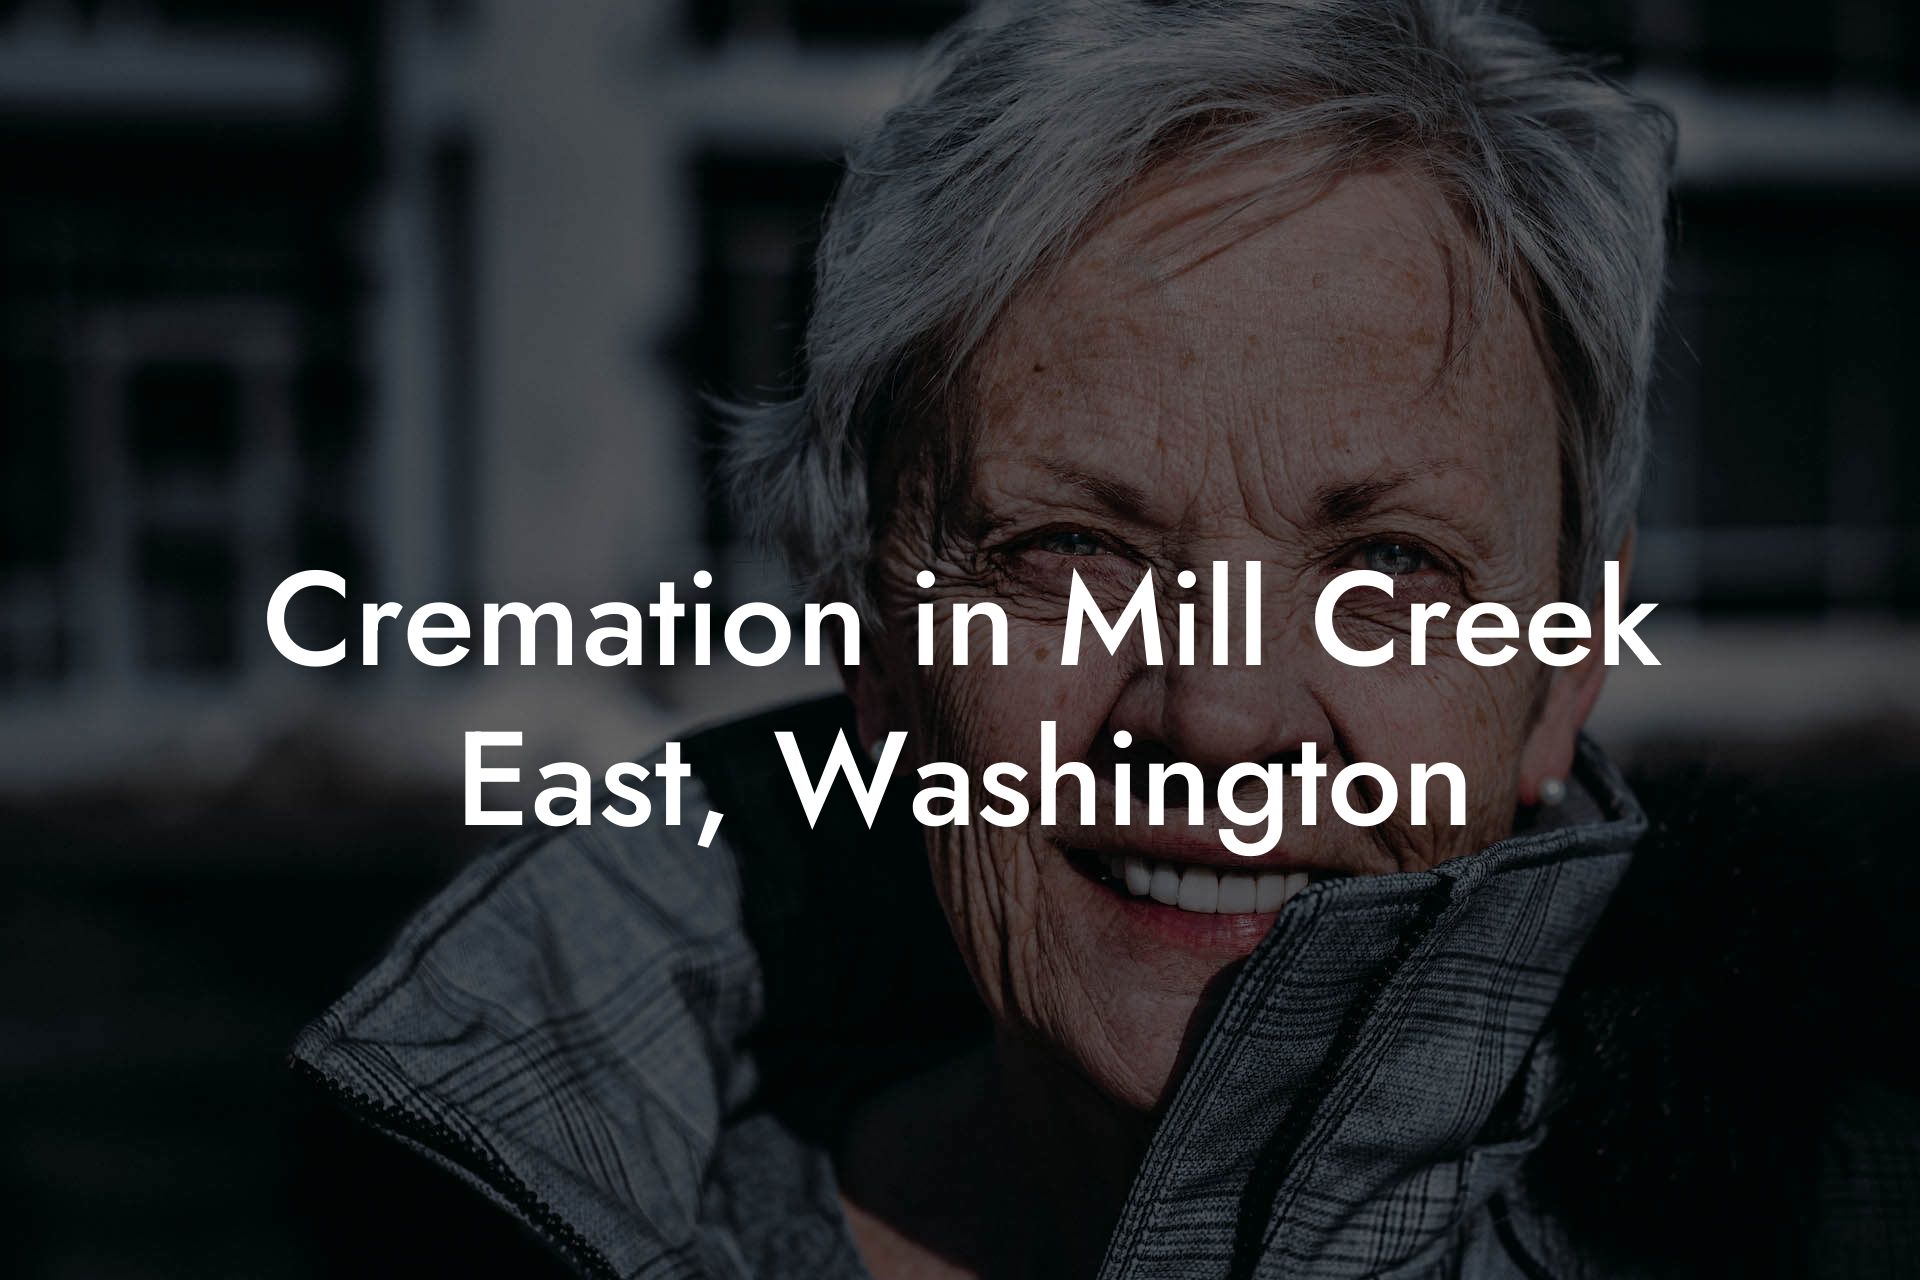 Cremation in Mill Creek East, Washington